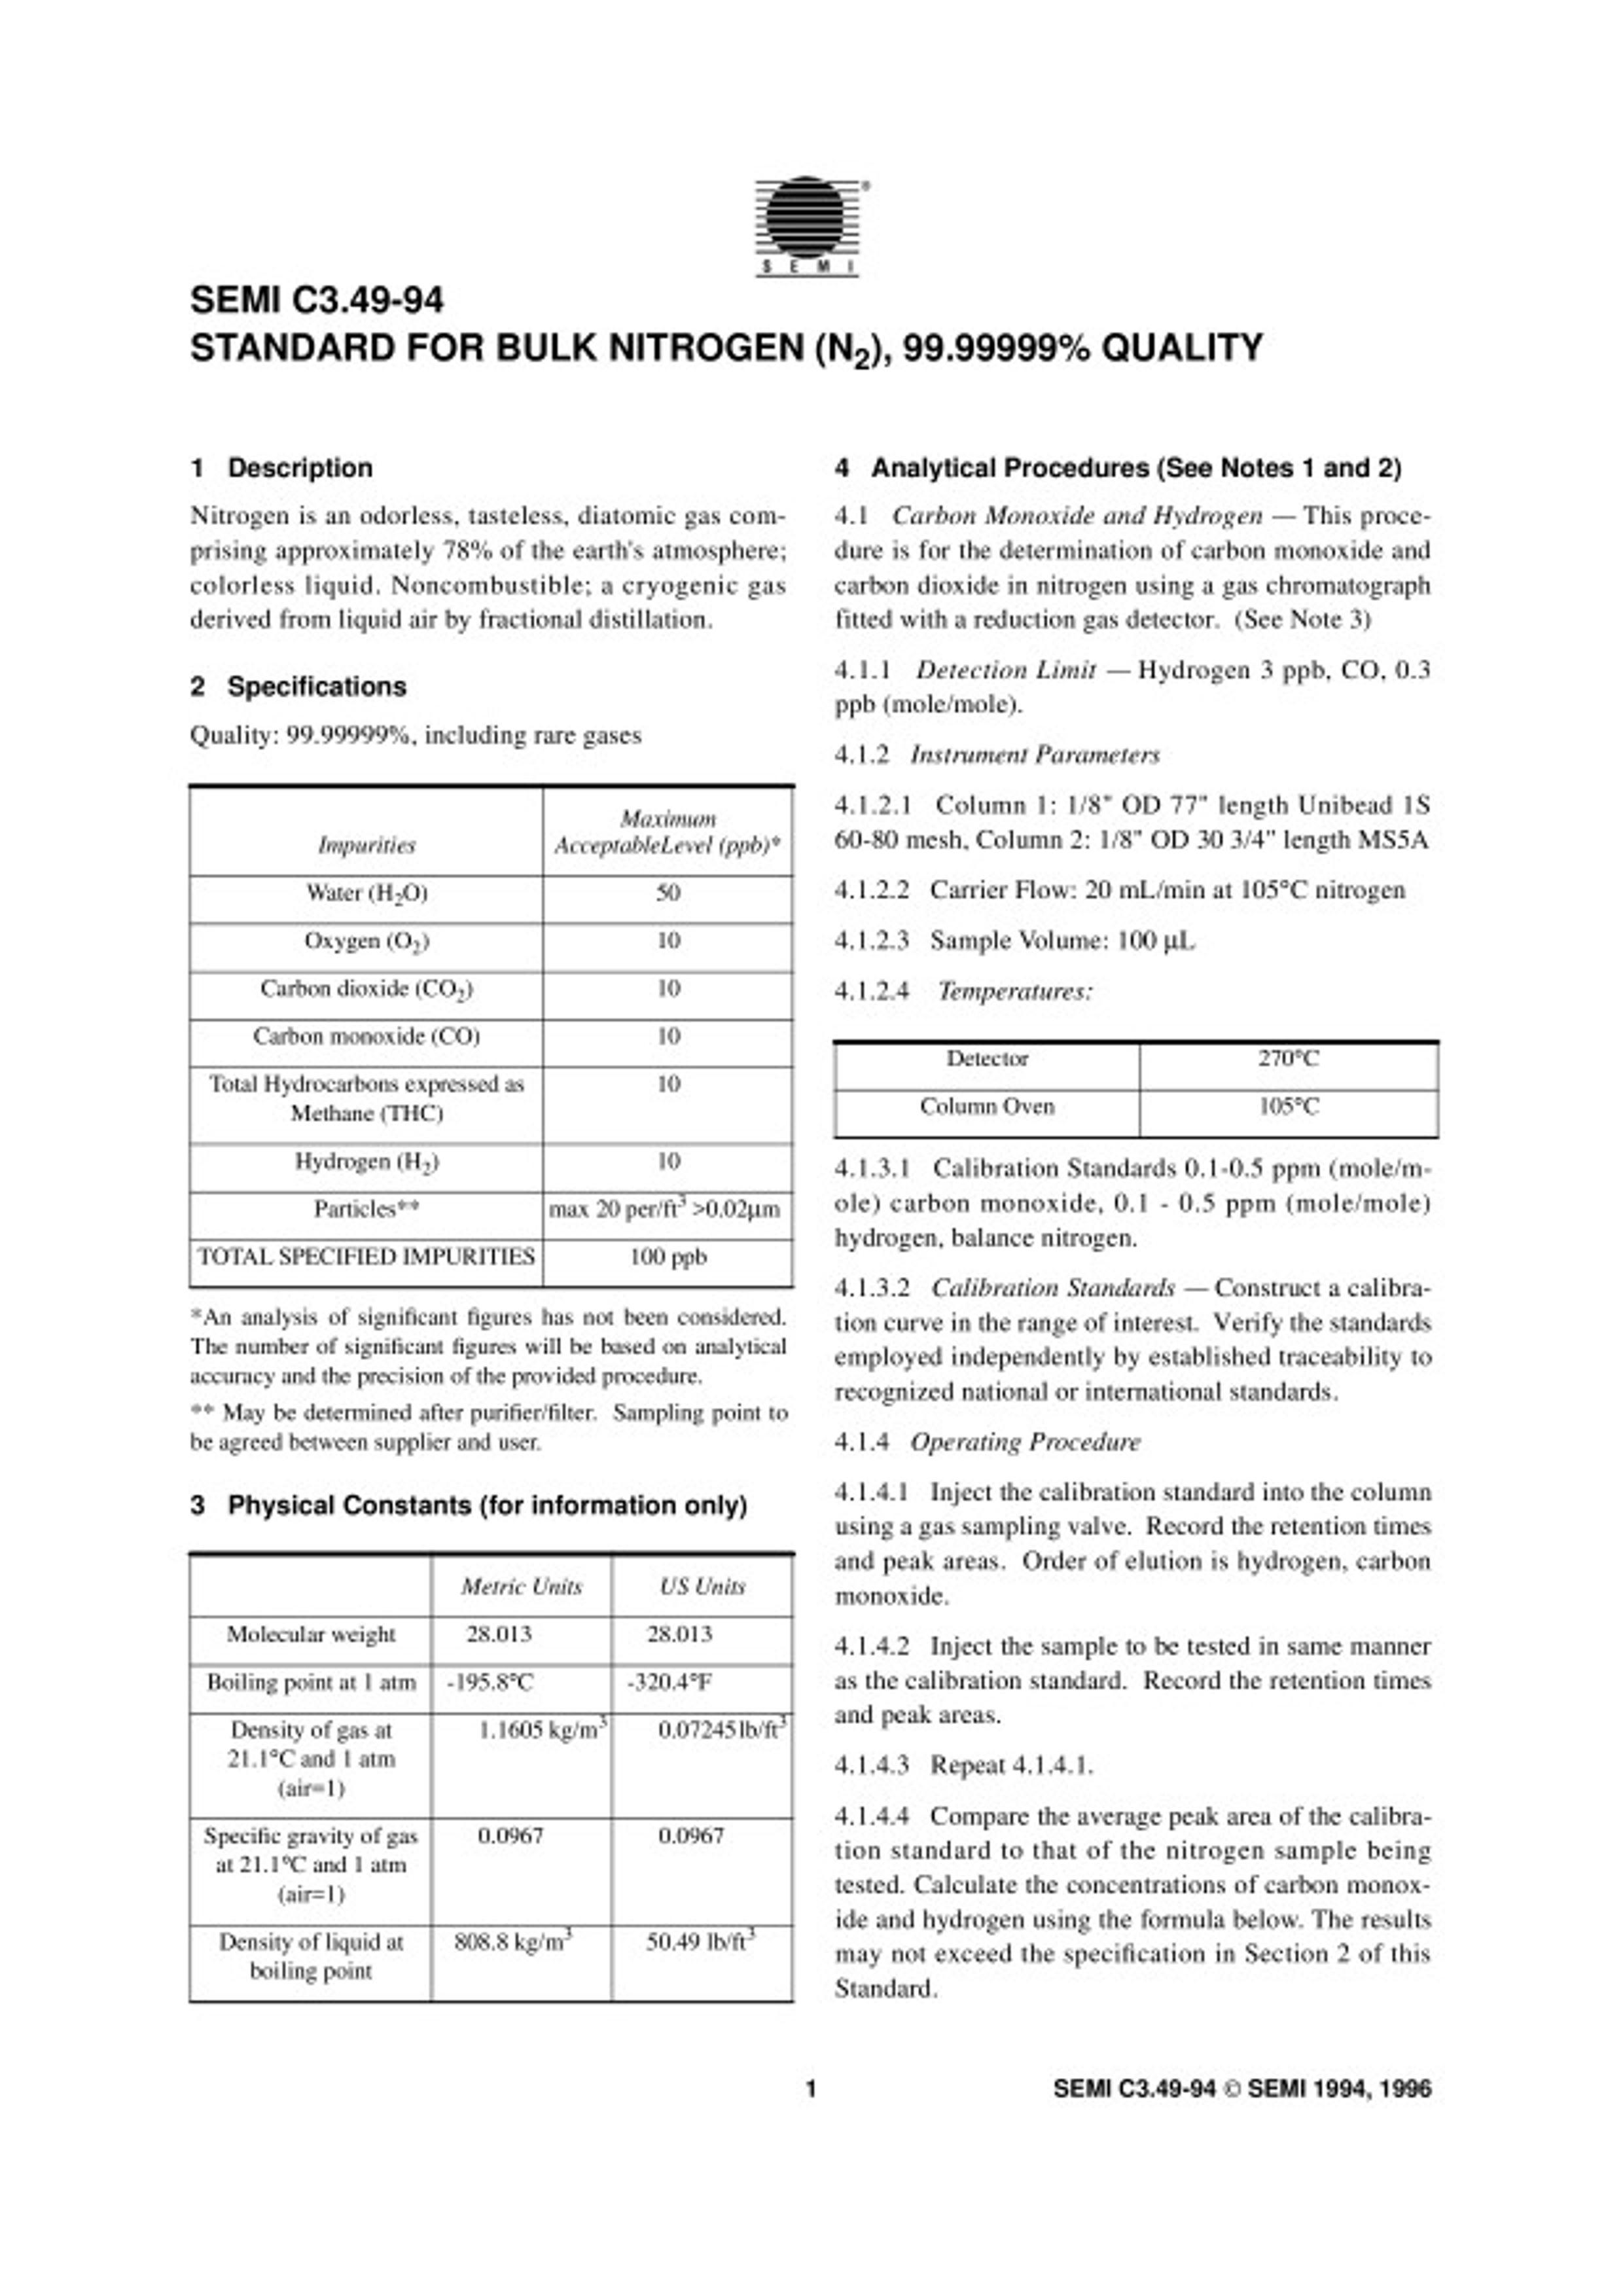 SEMI C3.49-94 STANDARD FOR BULK NITROGEN (N2), 99.99999% QUALITY.pdf1ҳ